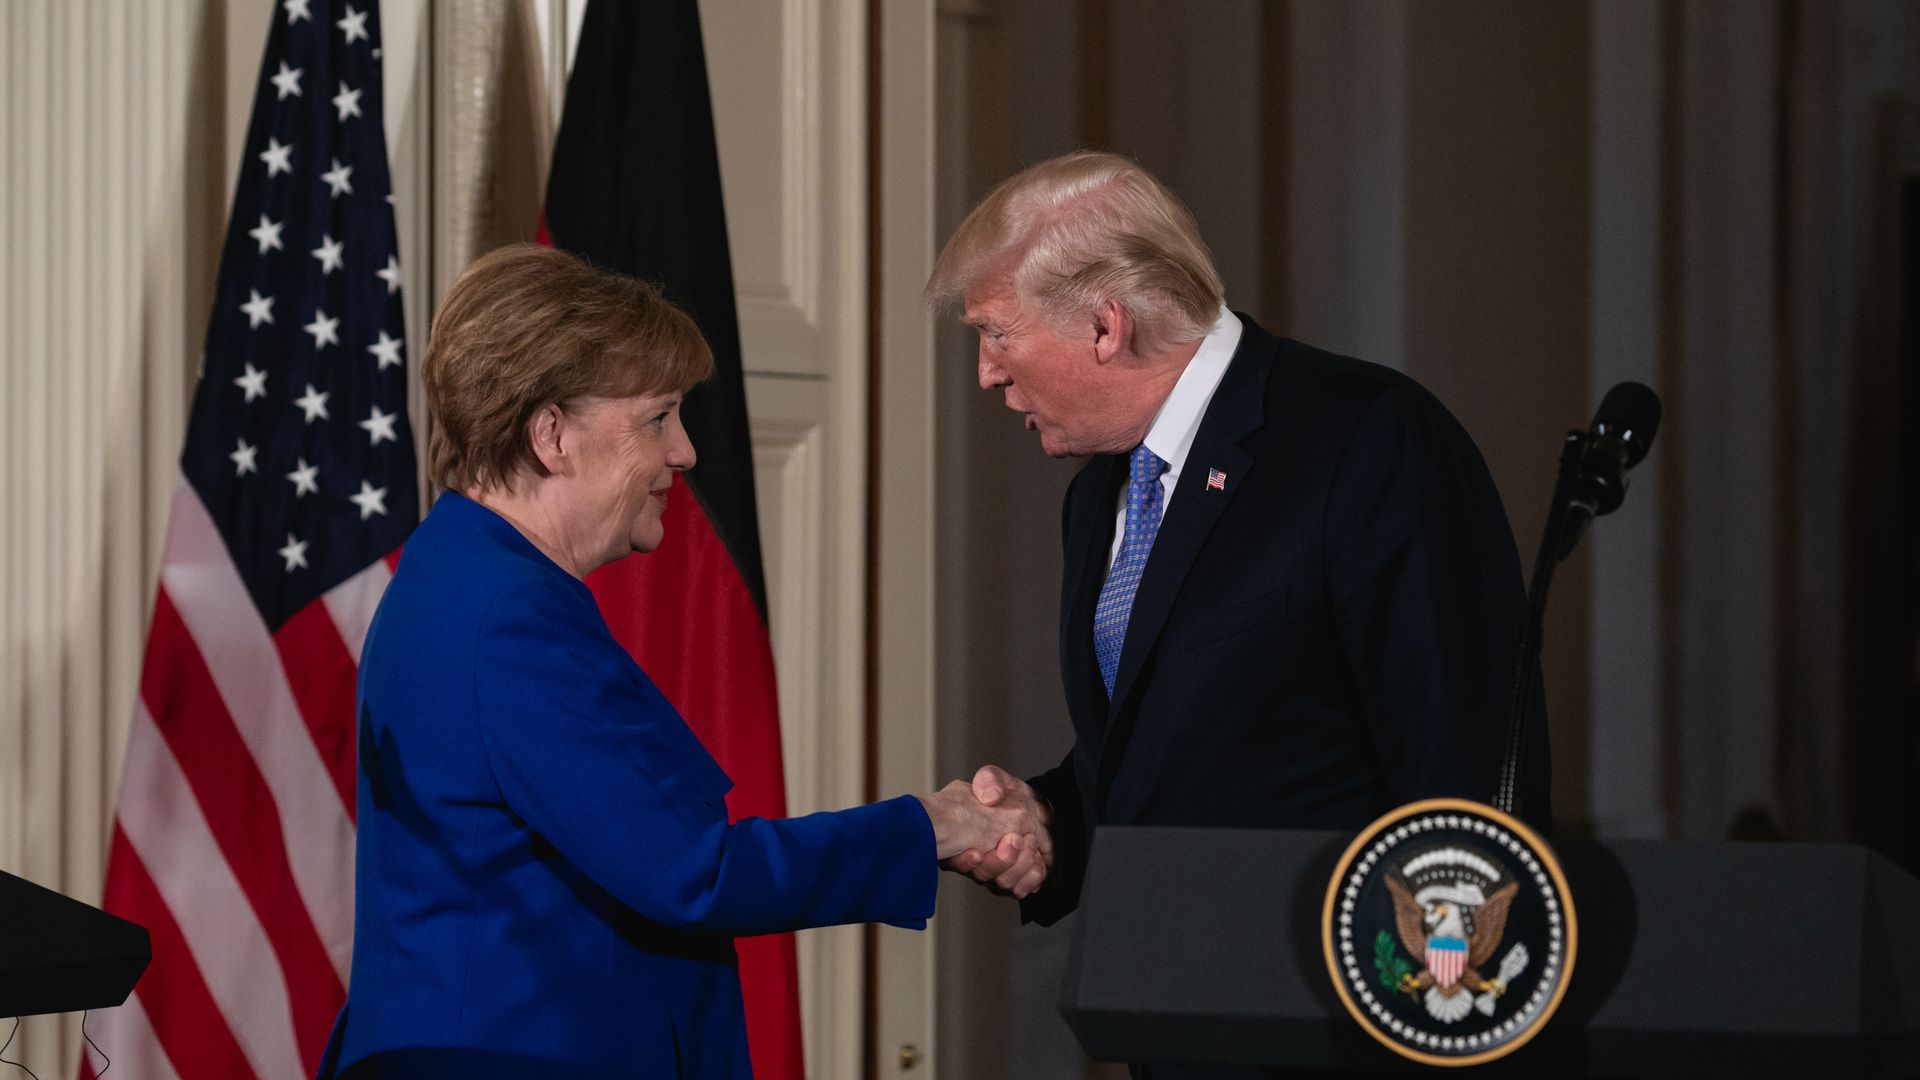 Donald Trump shakes German Chancellor Angela Merkel's hand during a meeting in Washington